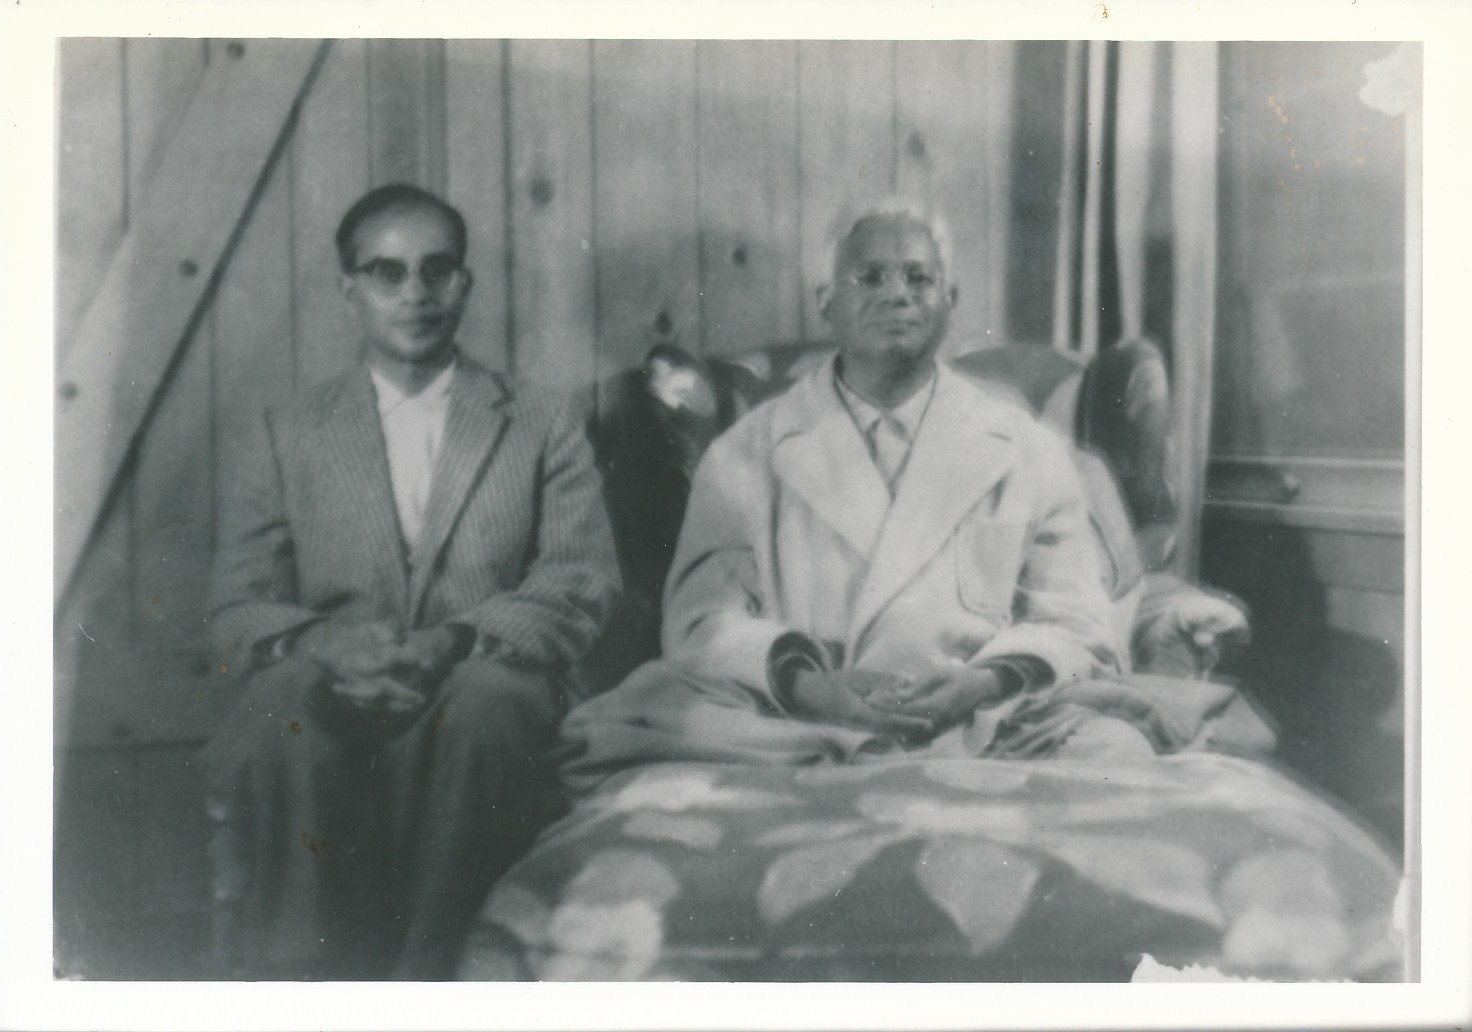 Swami Shraddhanandaand Swami Ashokanandaat Lake Tahoein1958